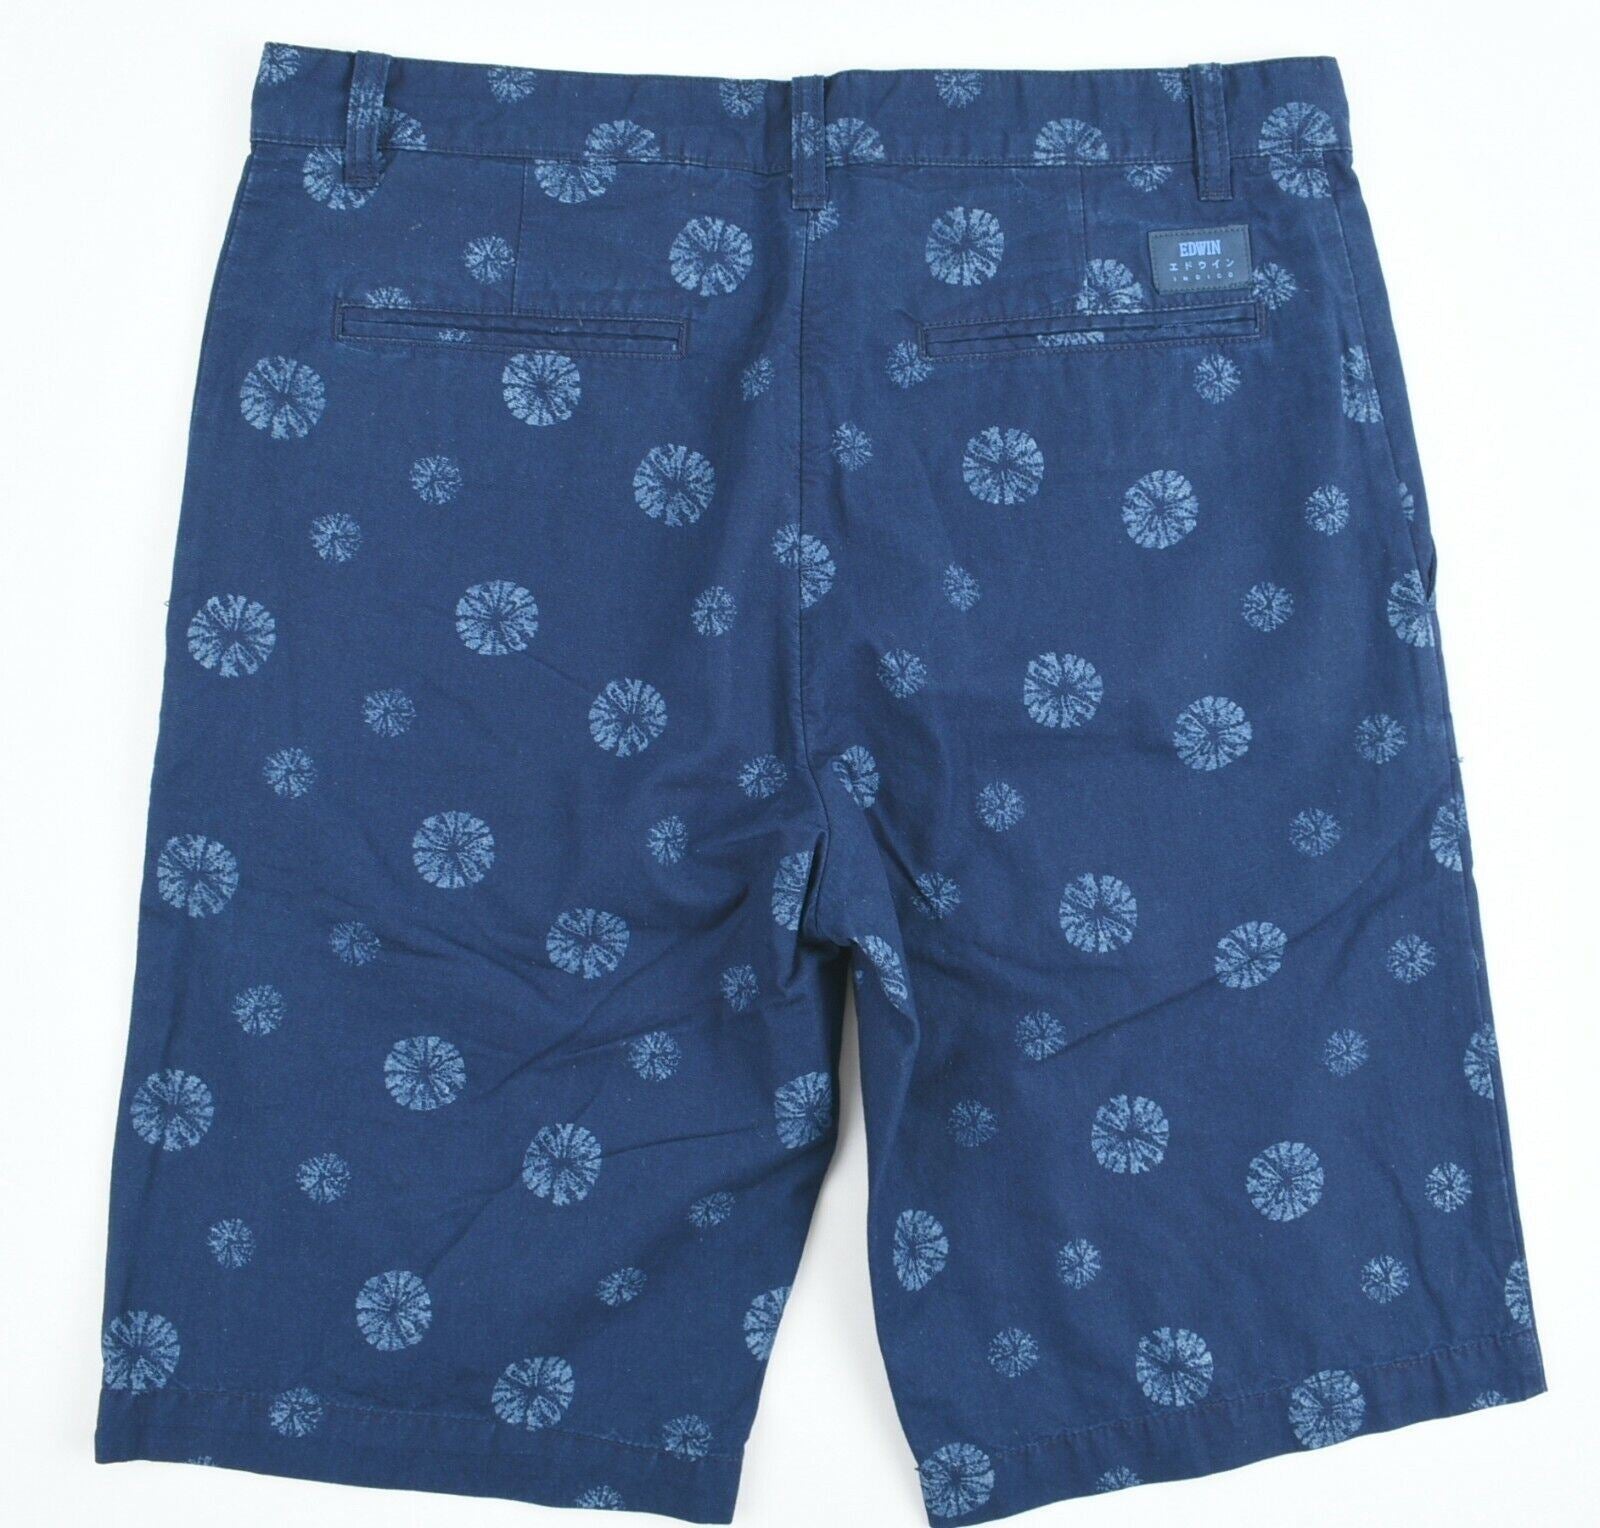 EDWIN Men's RAIL SHORTS, Straight Leg Chino Shorts, Blue/Printed, size W30